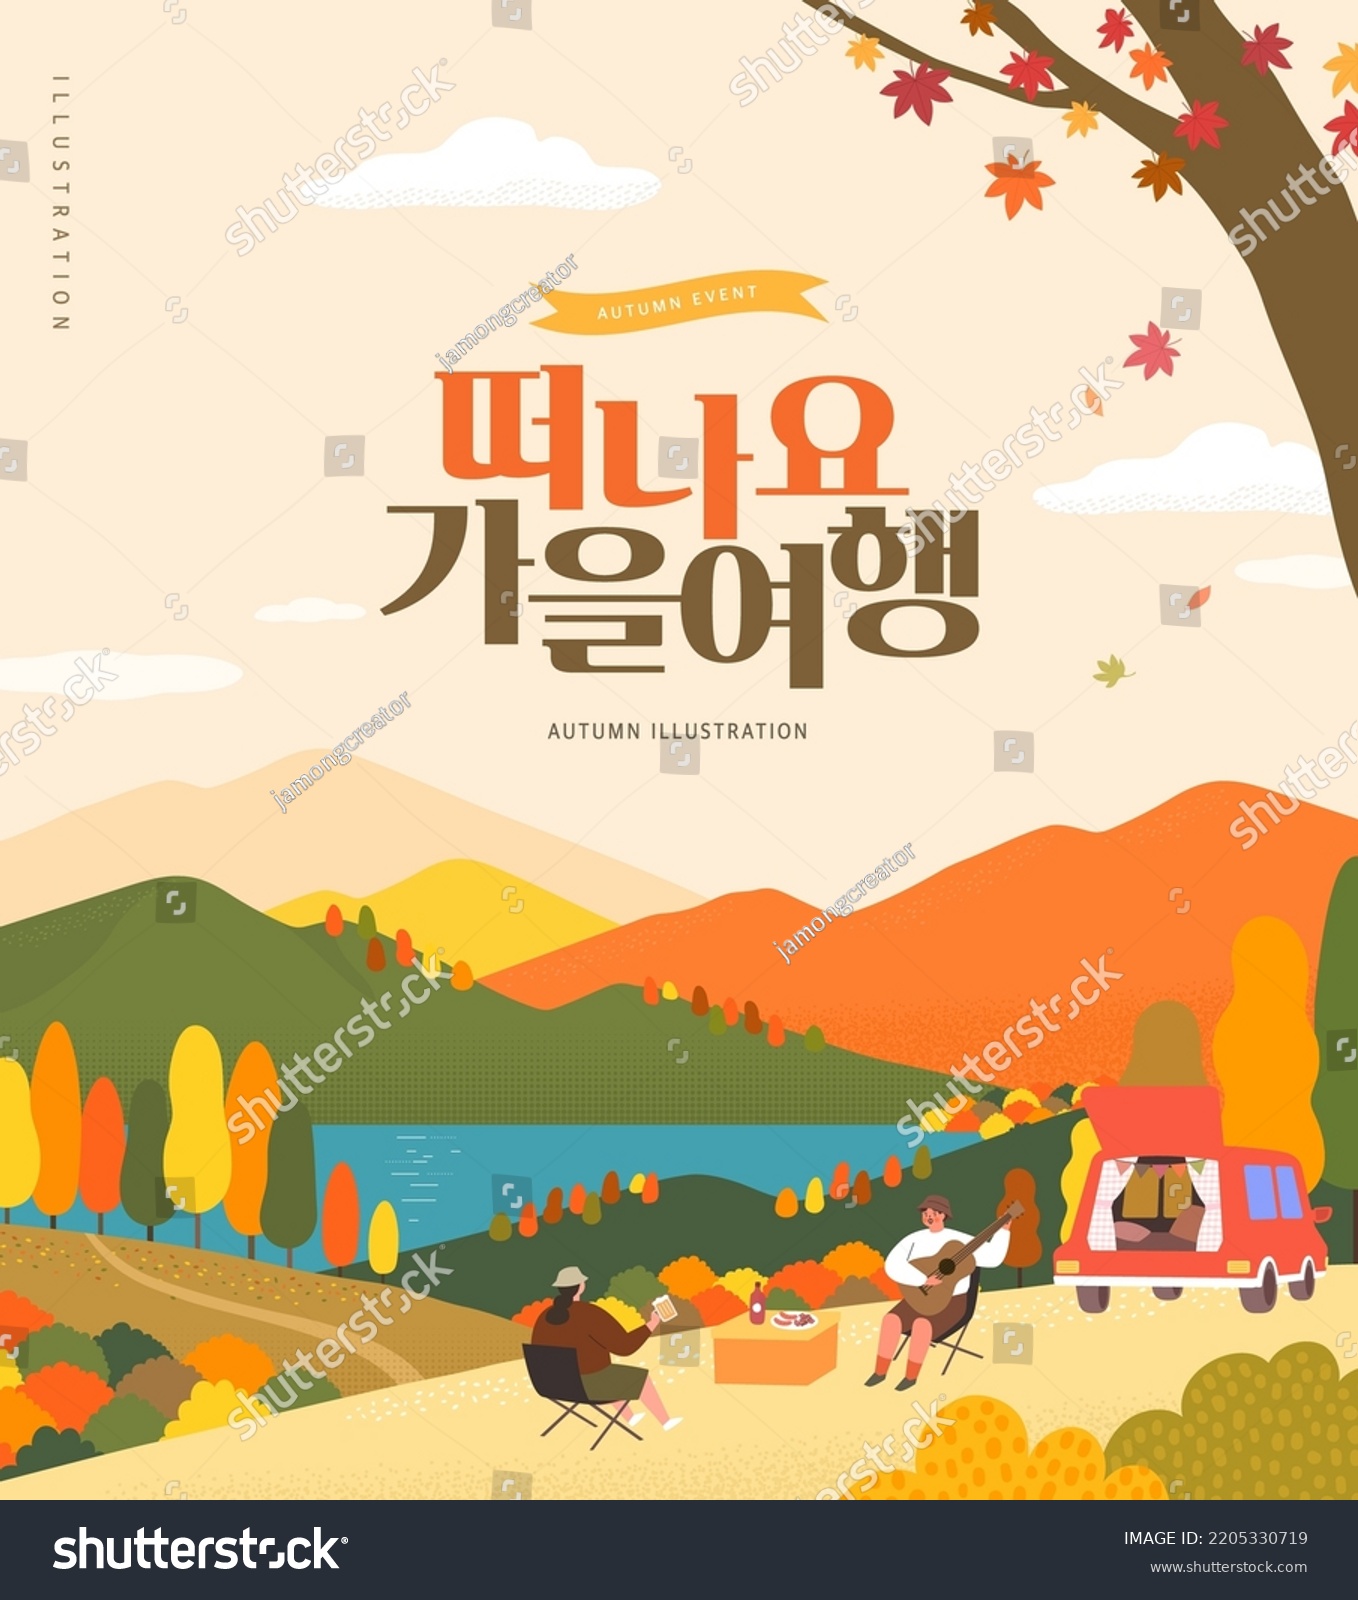 SVG of Autumn shopping event illustration. Banner. Korean Translation: 